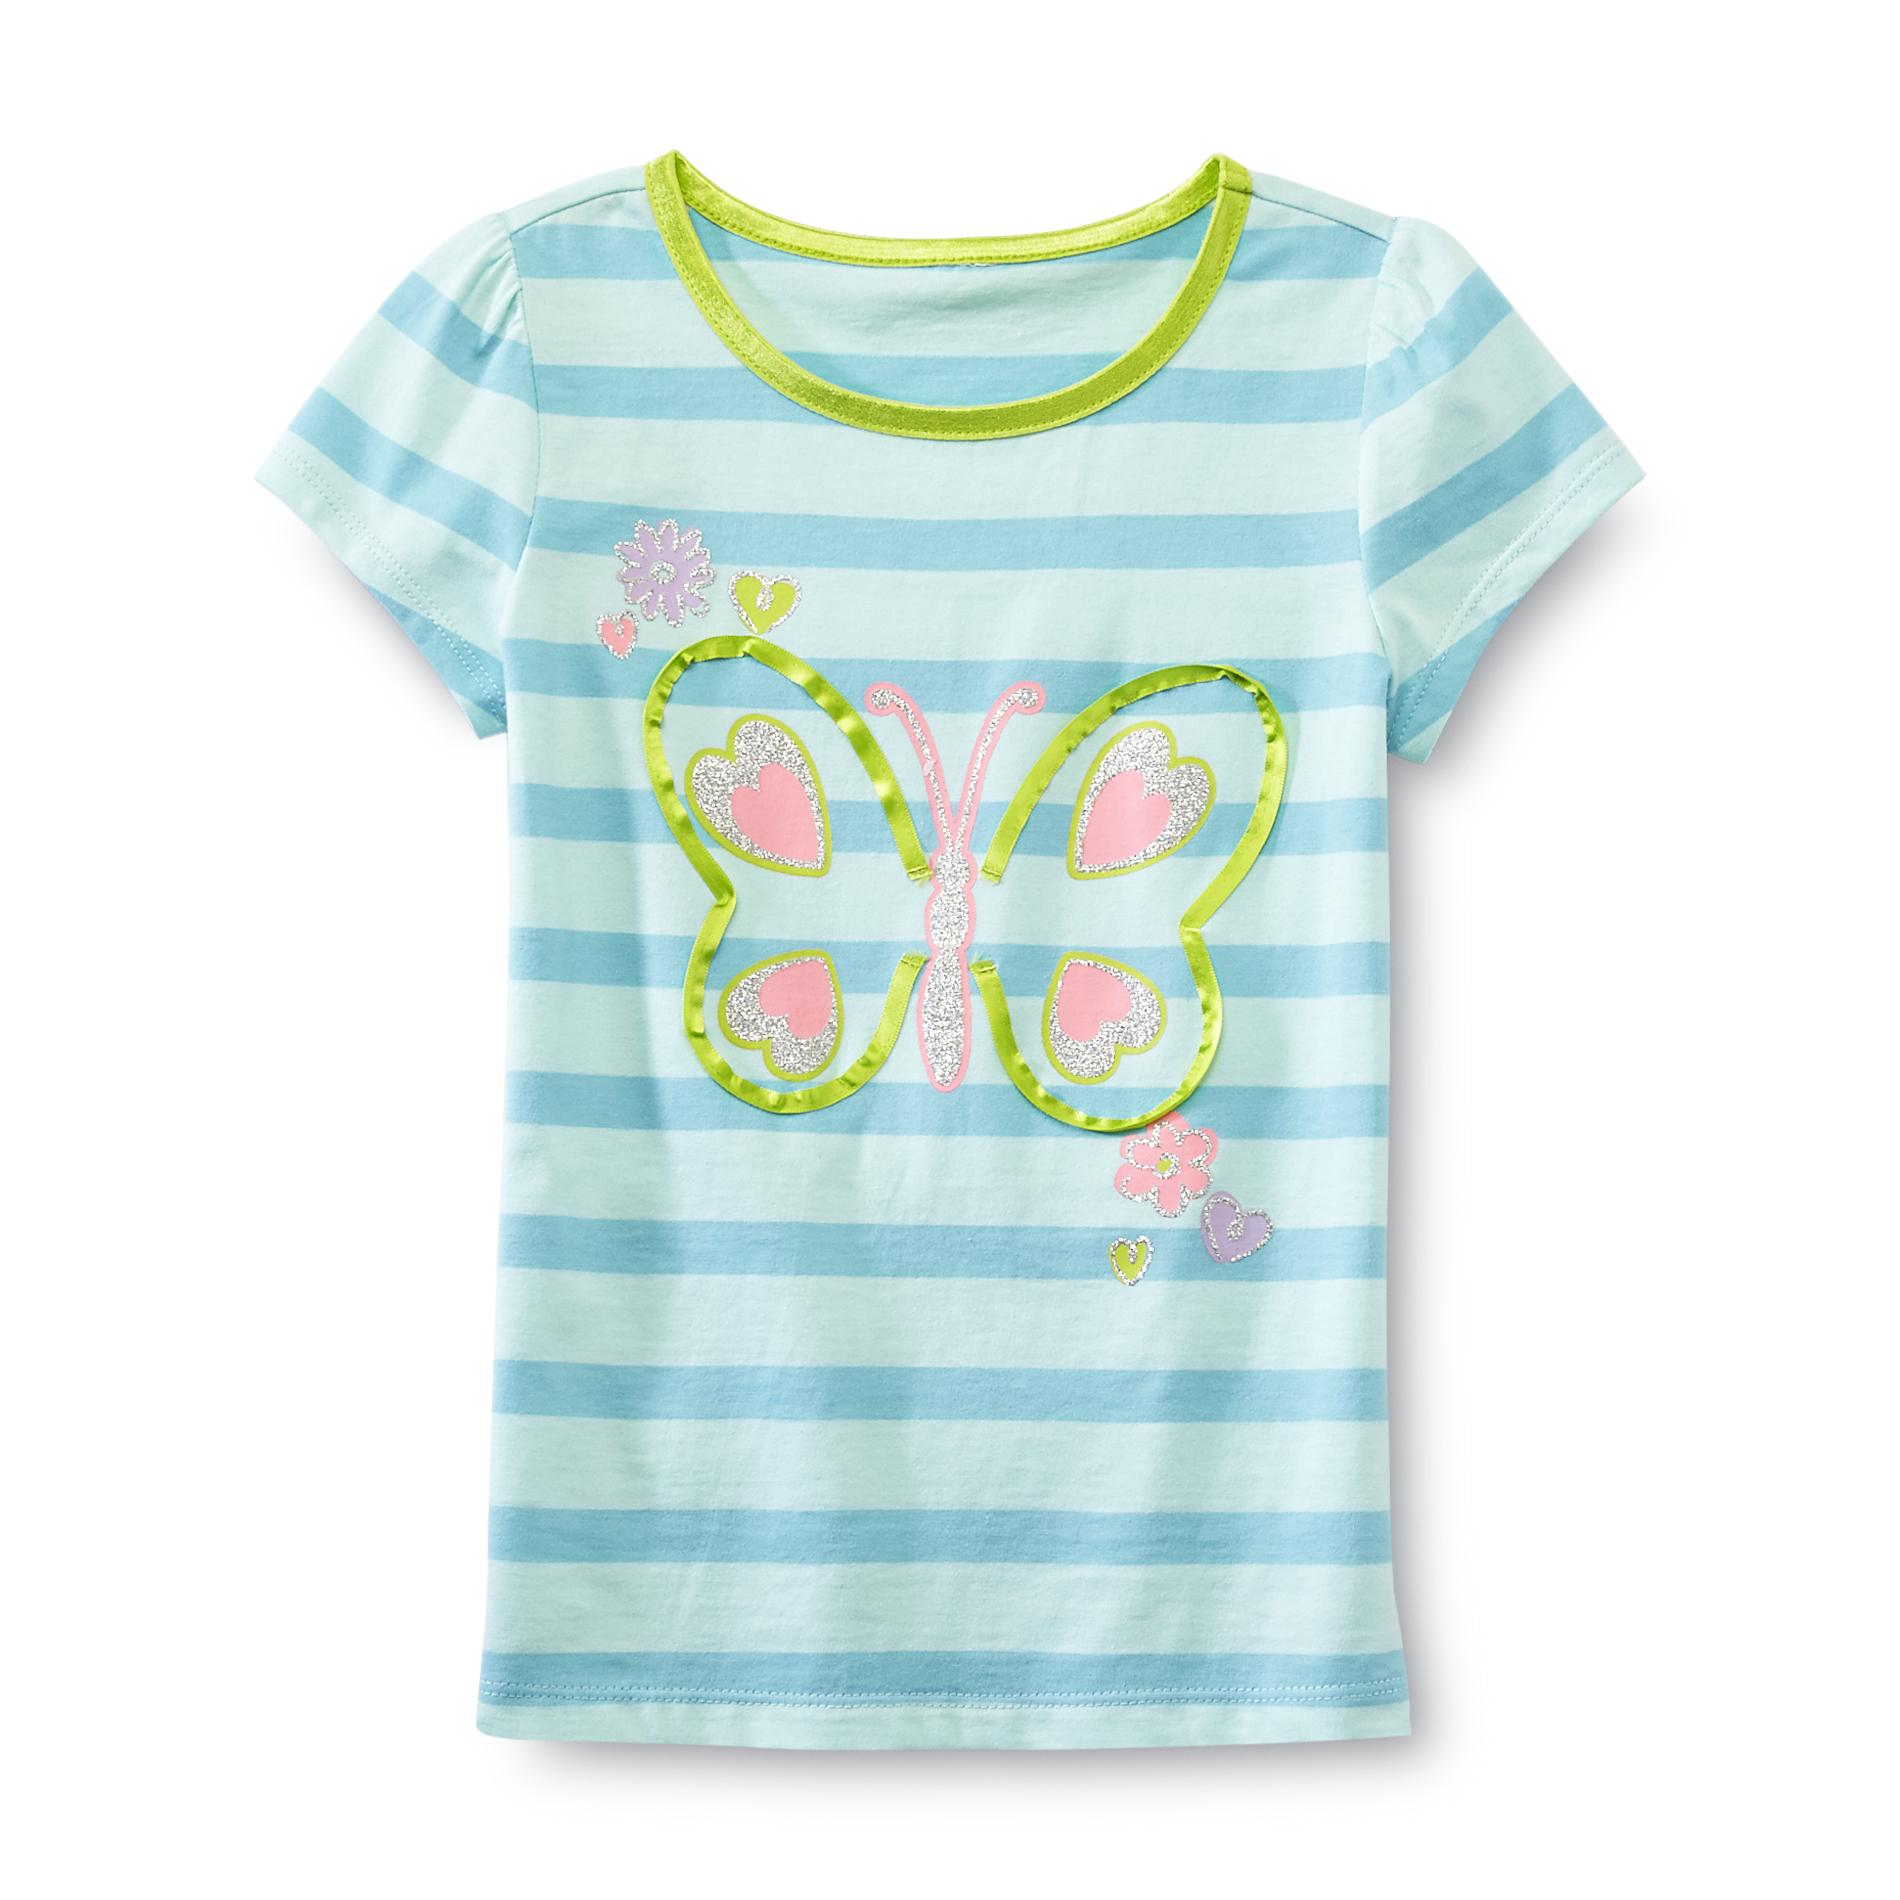 Toughskins Girl's Cap Sleeve Top - Butterfly & Stripe